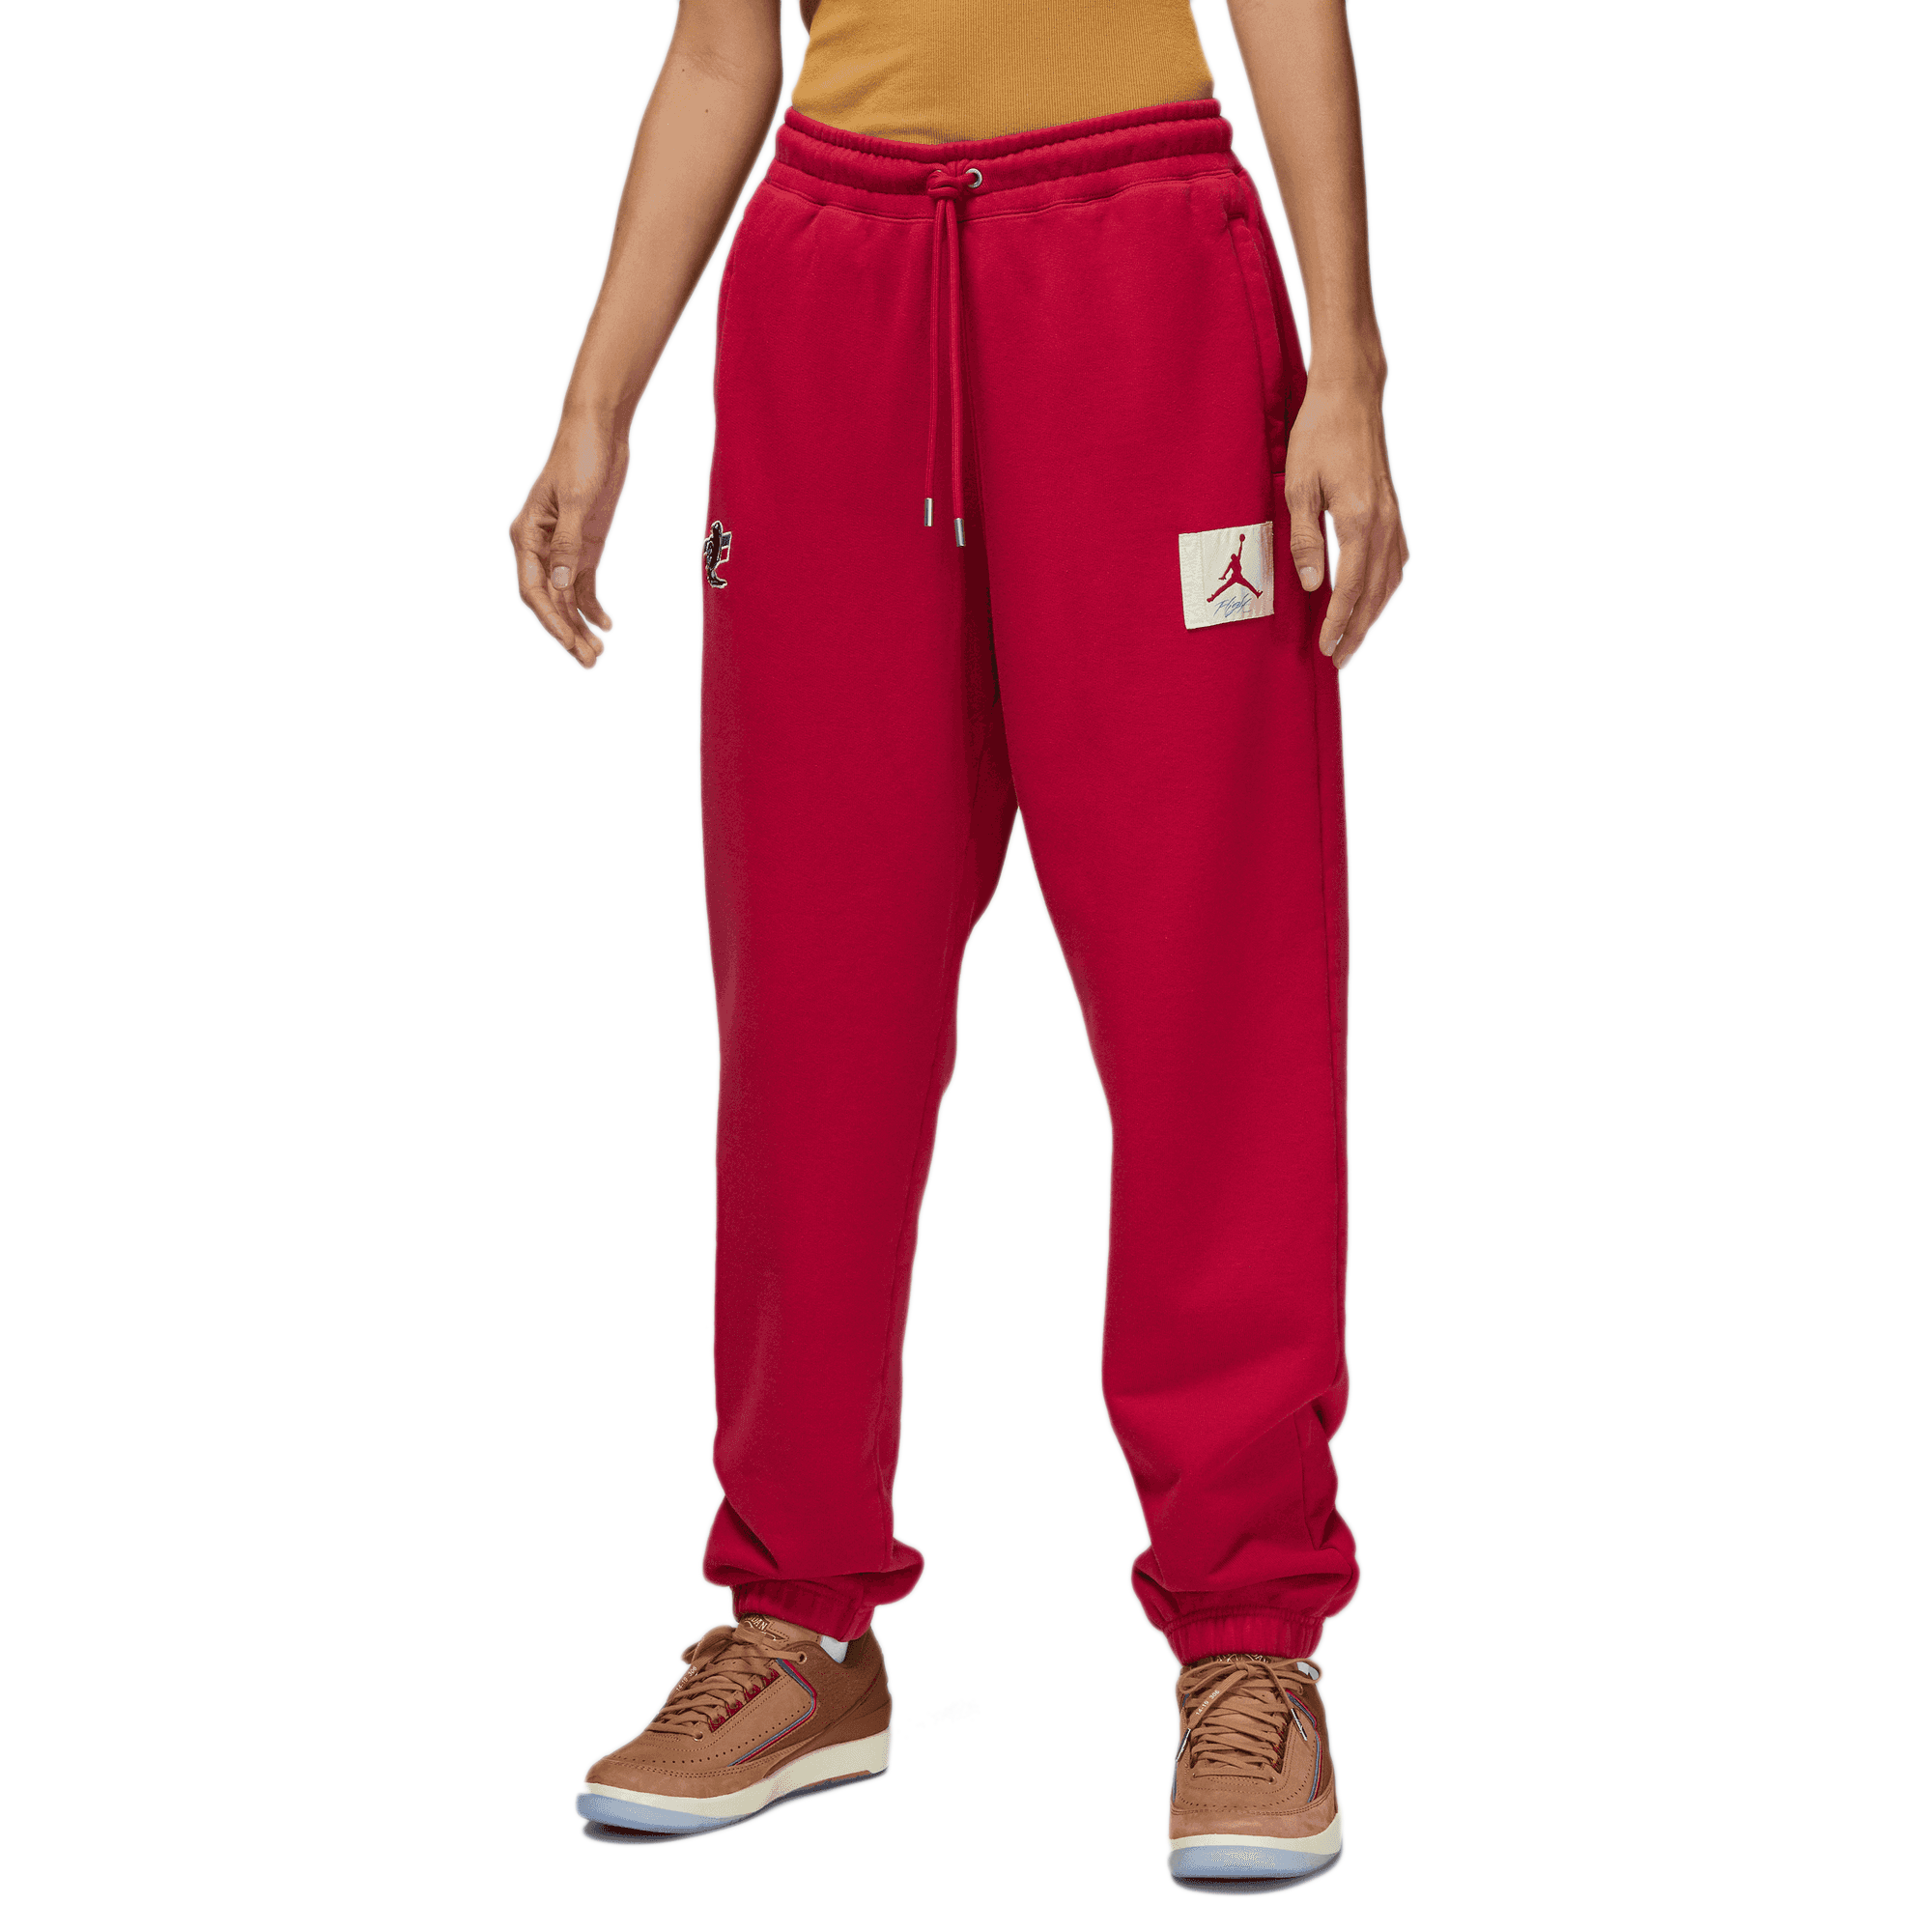 Men's Jordan Gym Red/Black Air Fleece Pants - XL style DA9858-687